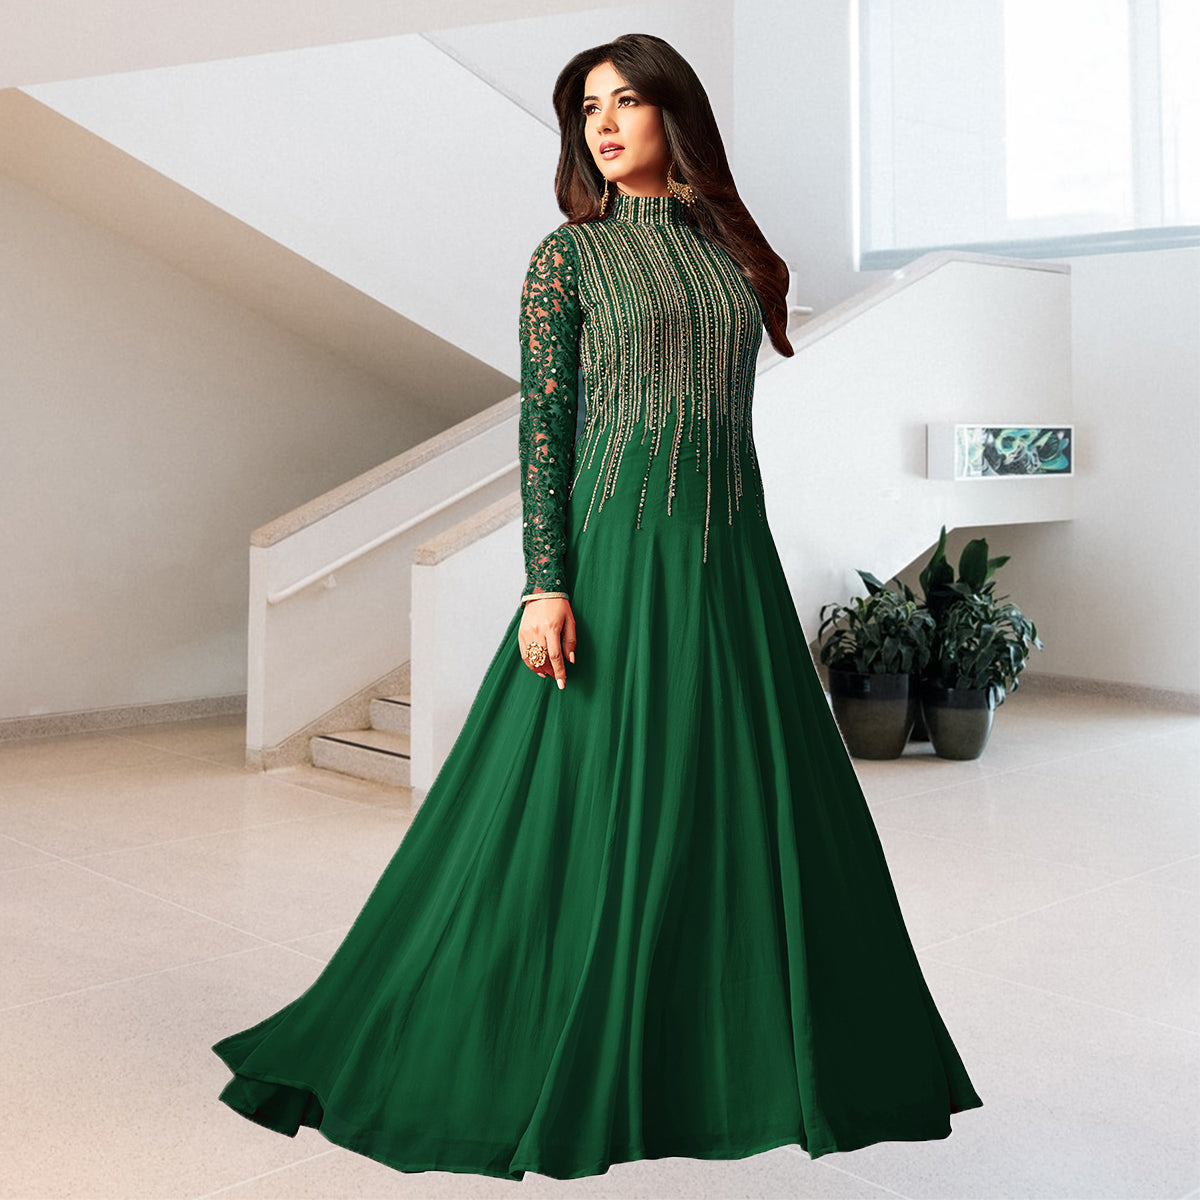 Shafnufab Green Embroidered Semi-Stitched Anarkali Suit